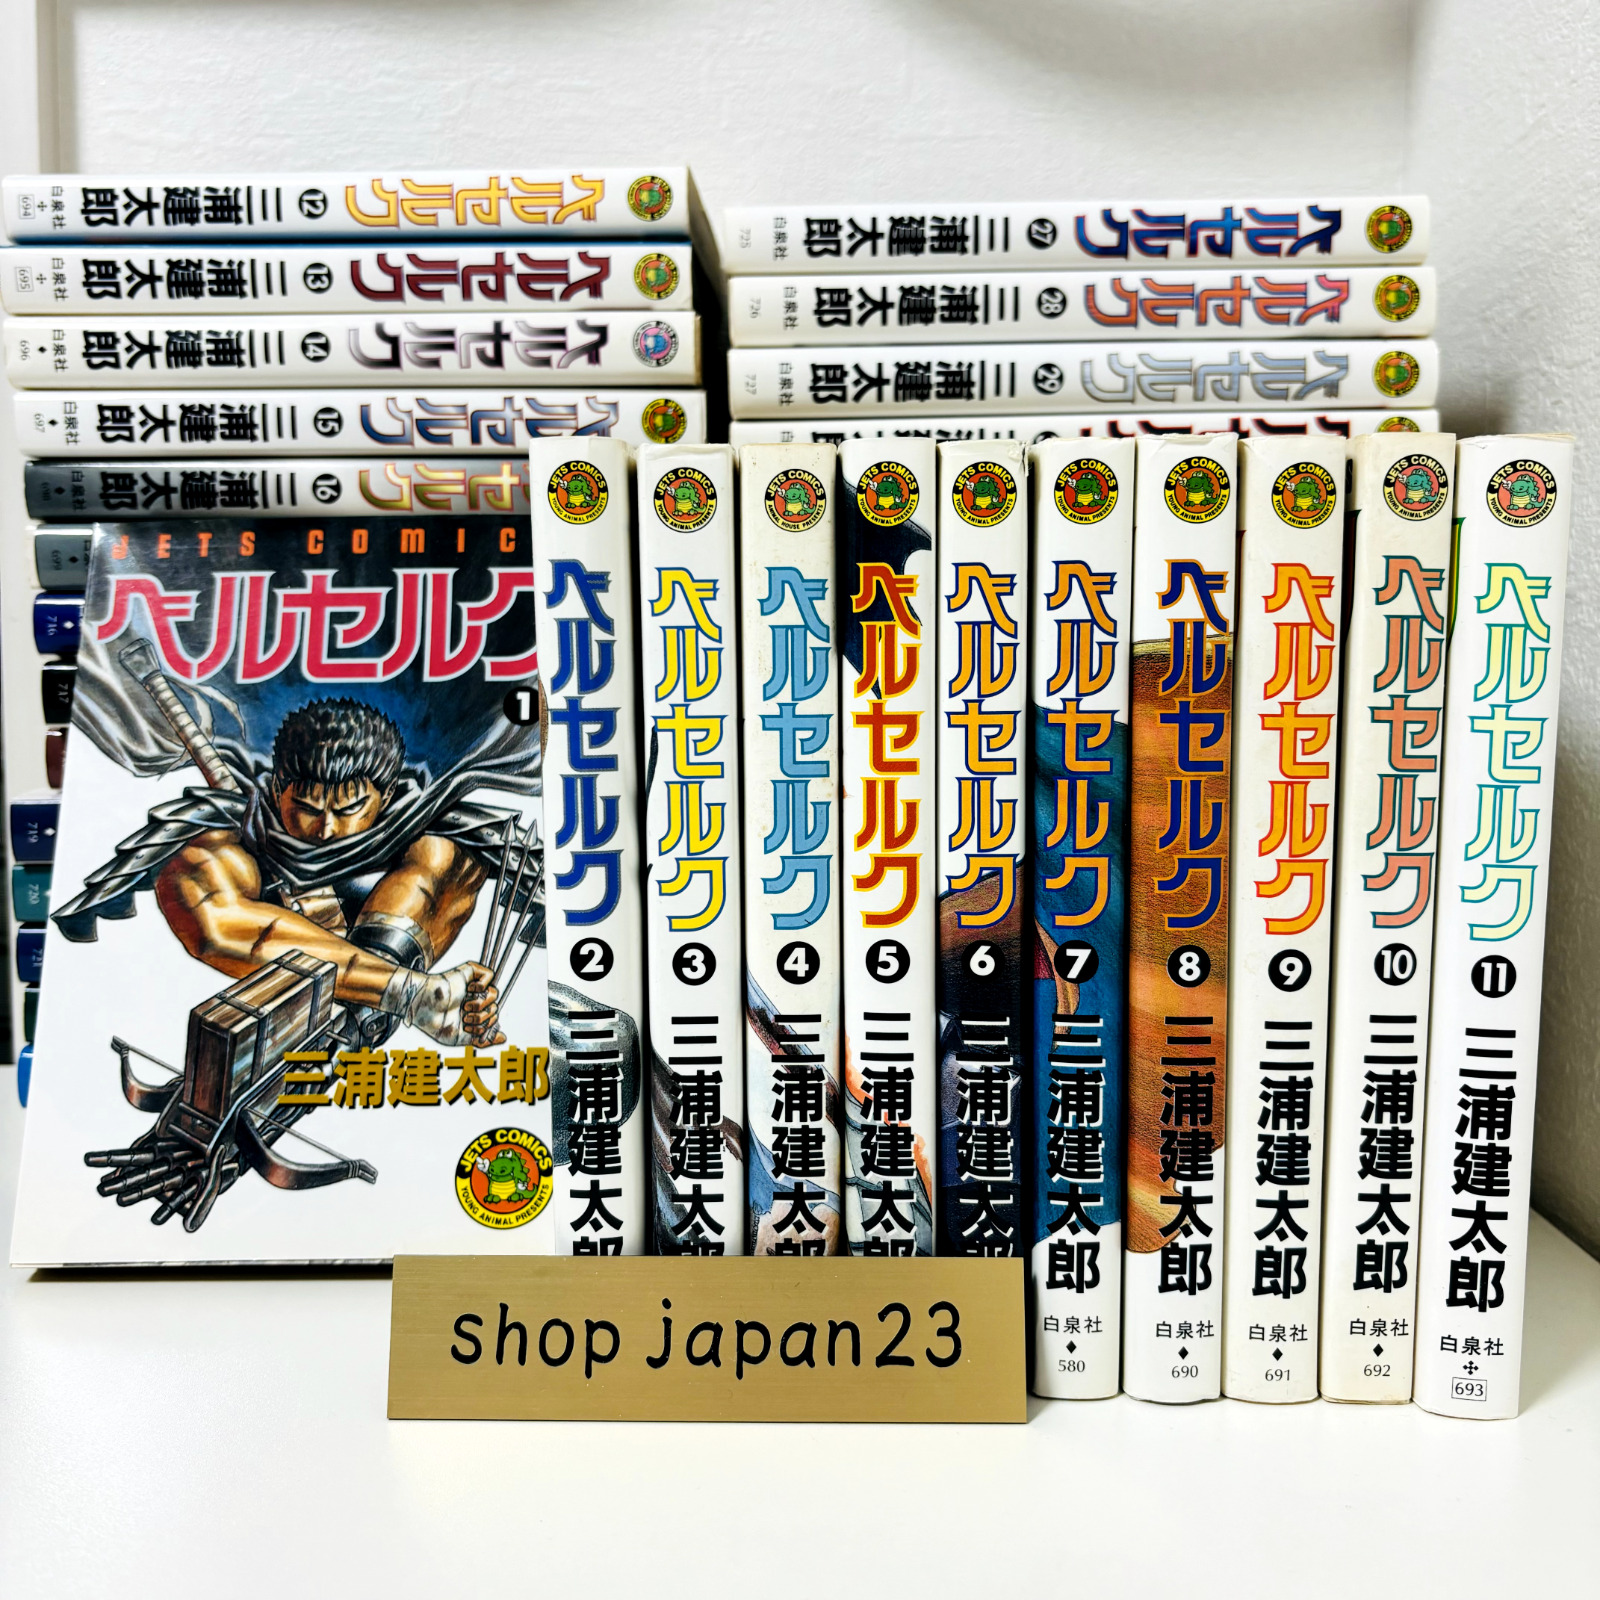 Berserk Vol.1-41 Manga Comics Set USED / Vol.11-41 is 1st Print Edition